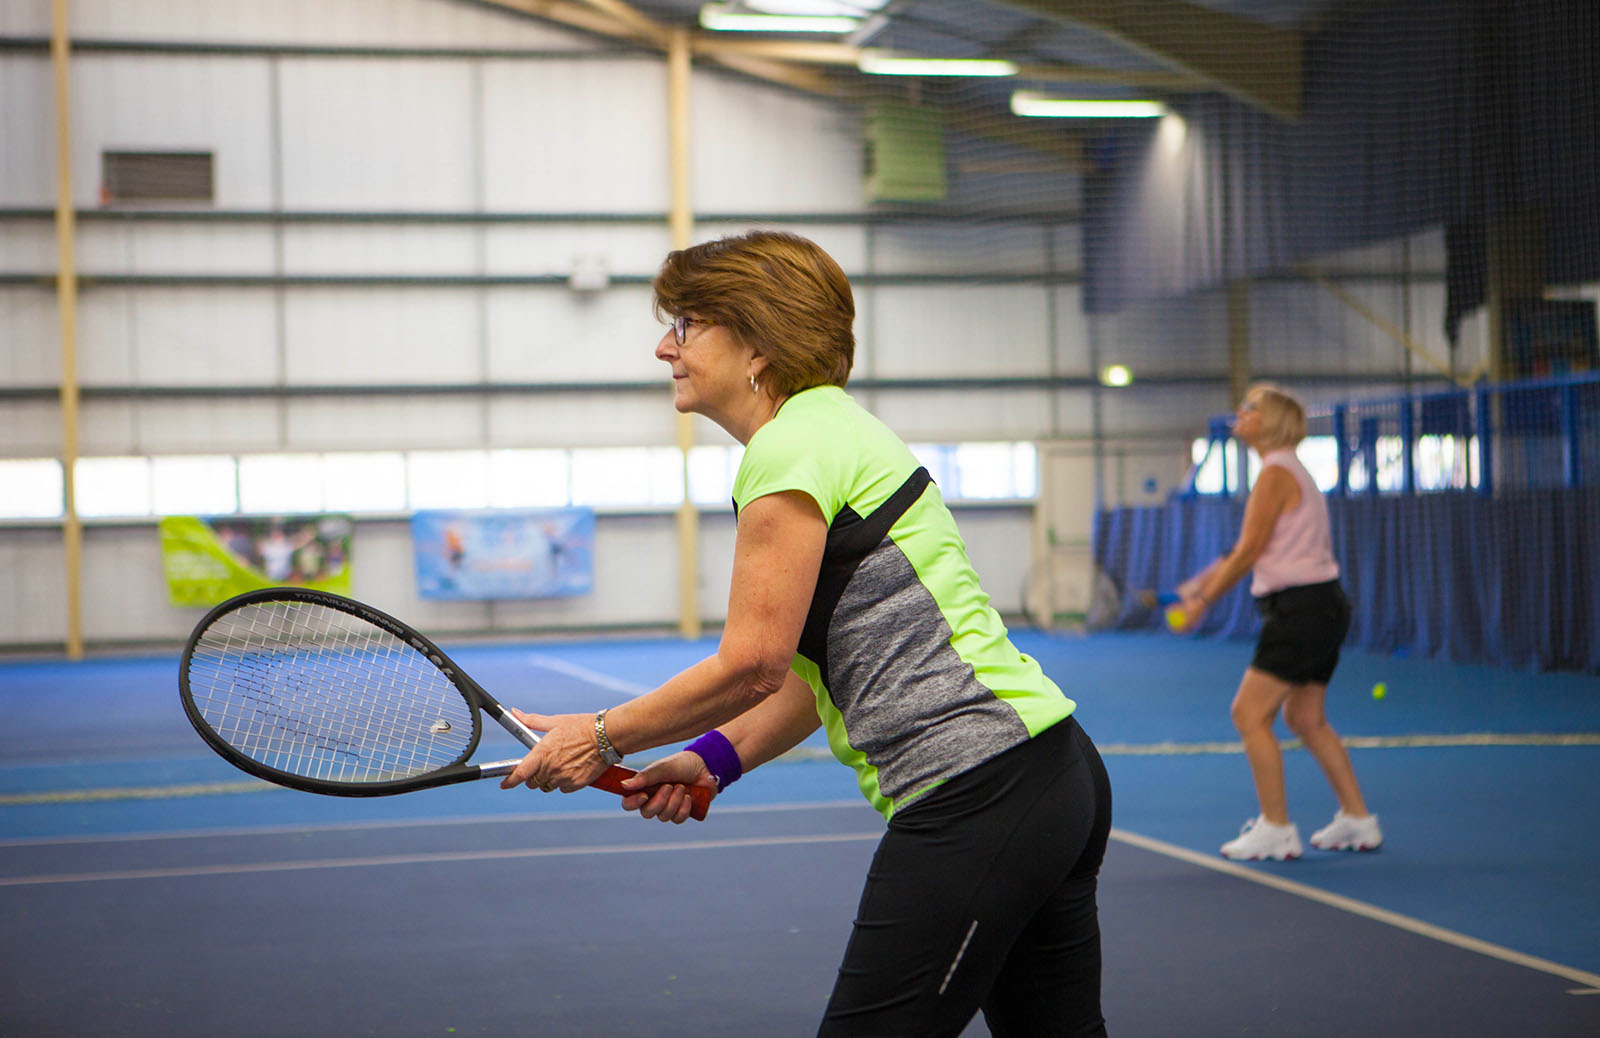 woman in a green t-shirt holding a tennis racket